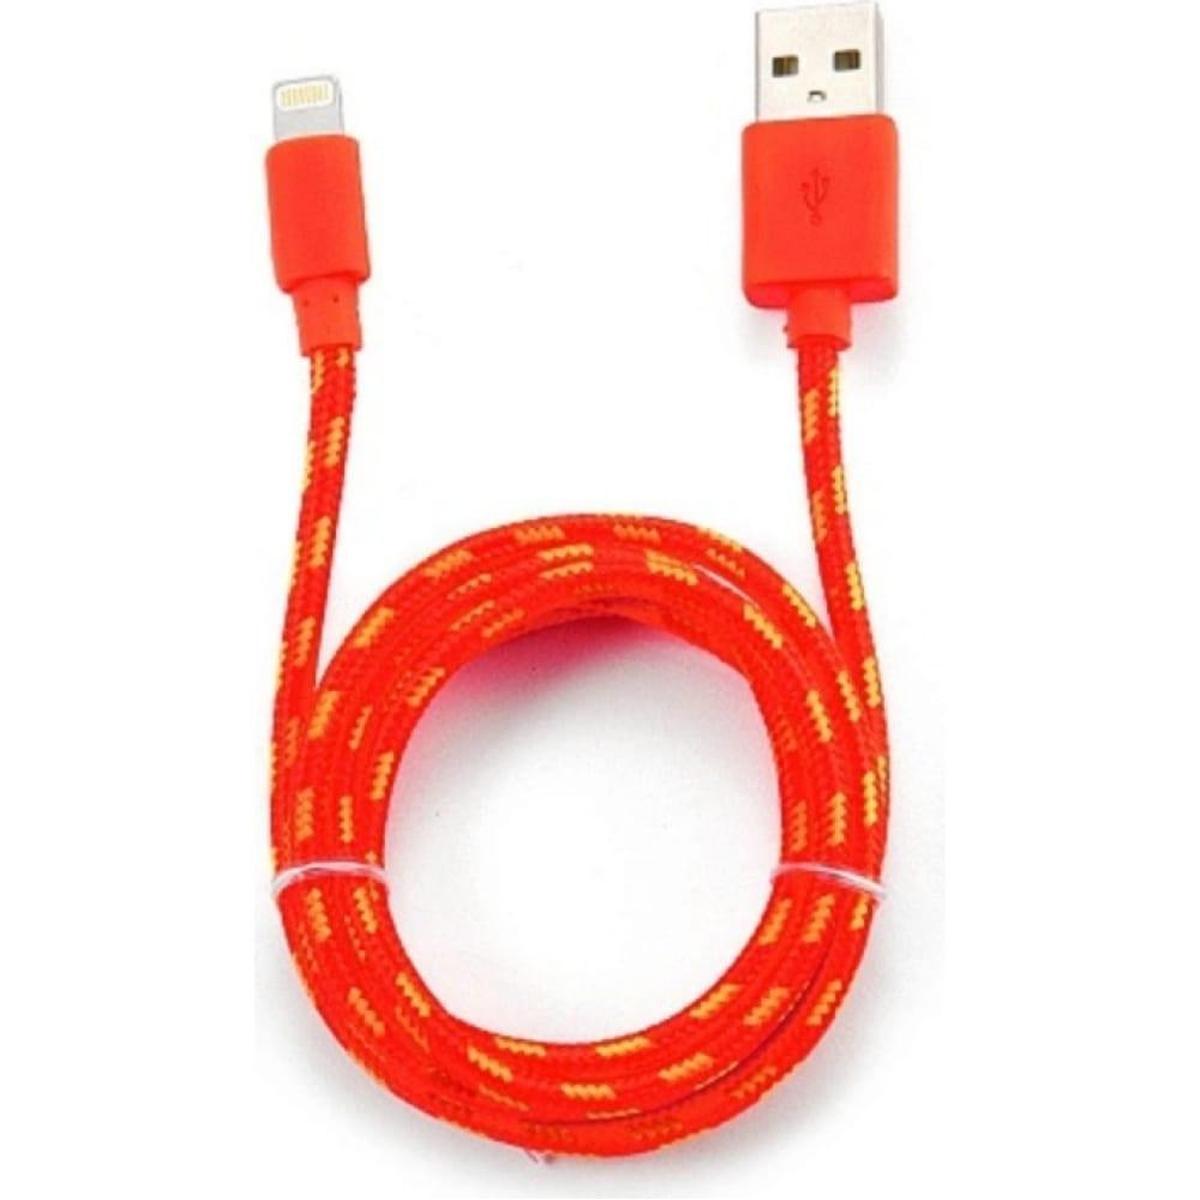 Шнур штекер USB A-штекер iPhone5/6/7, длина 1м, в металлической защите розового цвета, №13267P шнур шт USB A-шт iPhone5/6/7\ 1,0м\кругл\\роз